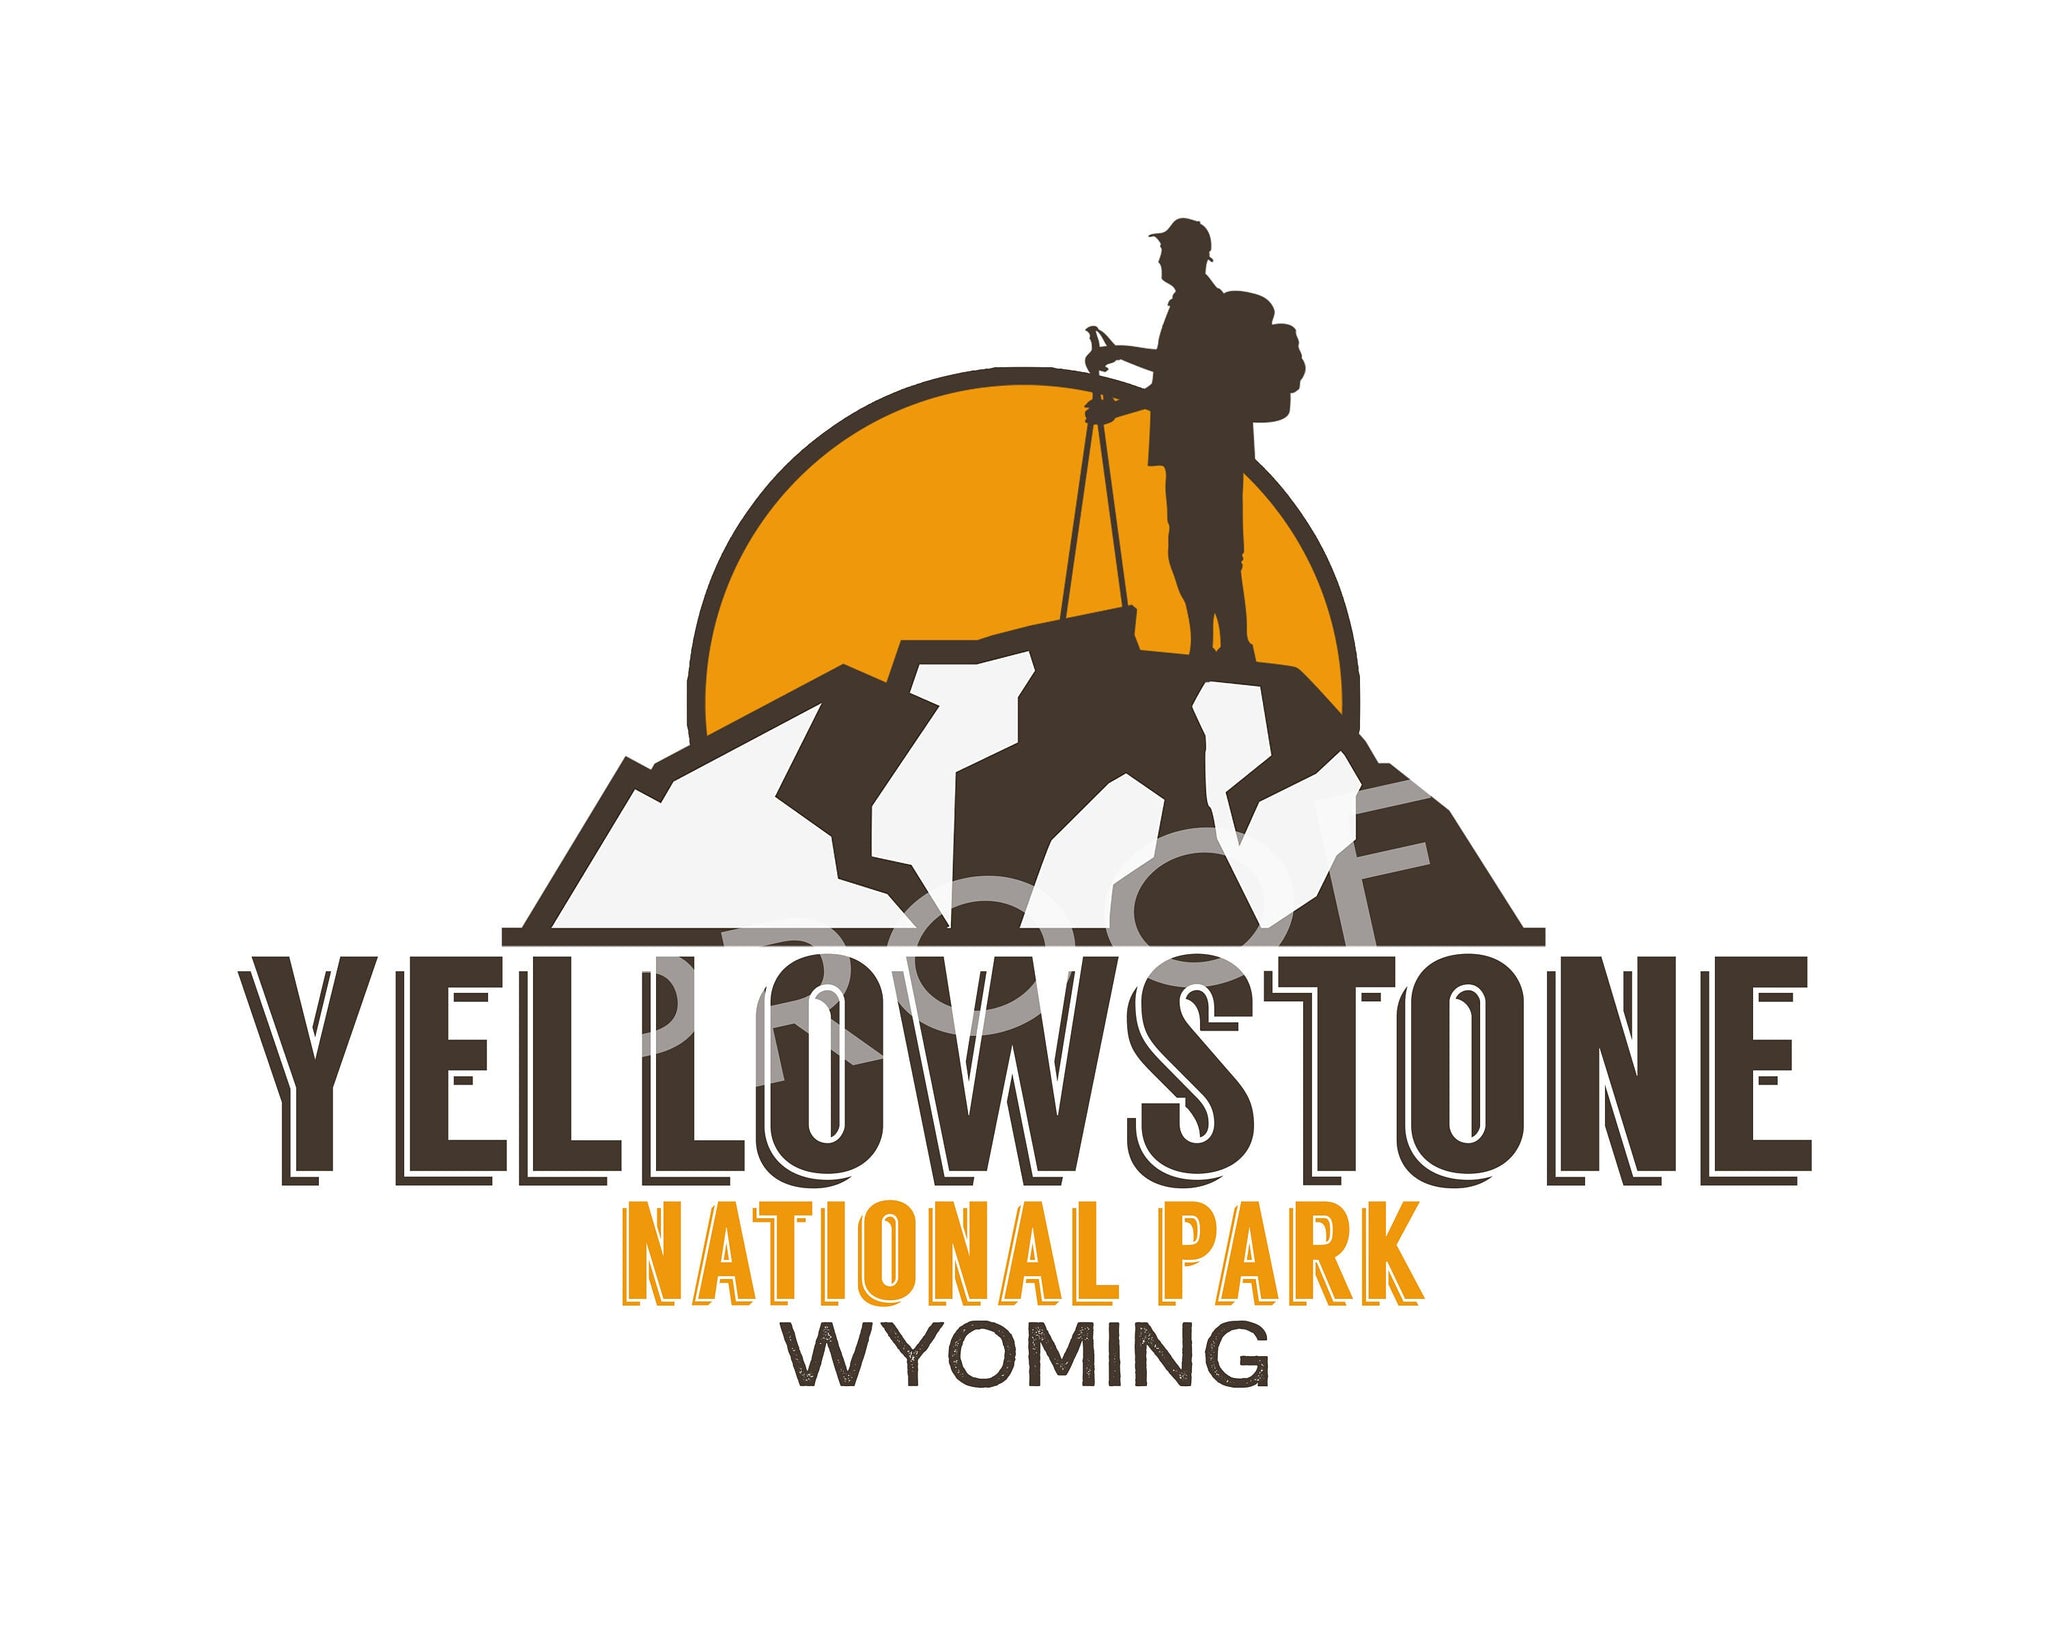 Hiking Yellowstone National Park Wyoming Vinyl Decal 4" x 3" Hiker